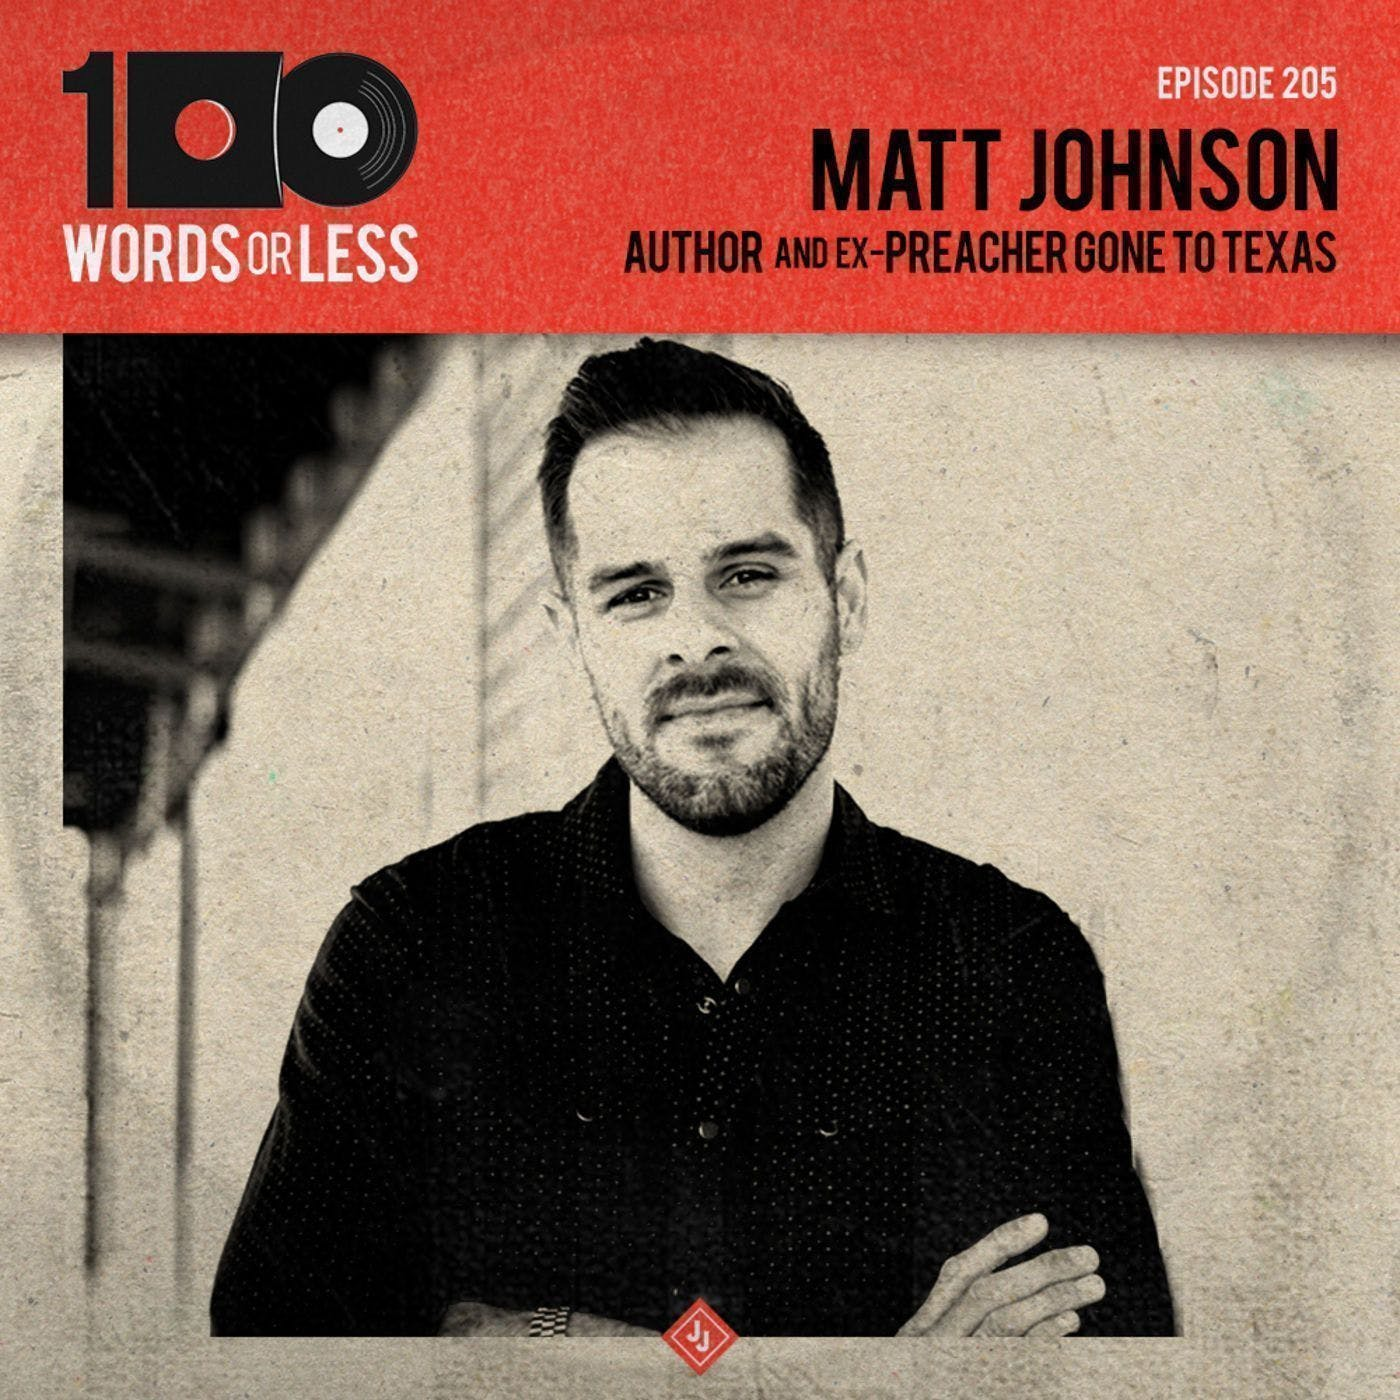 Matt Johnson, author and ex-Preacher Gone To Texas